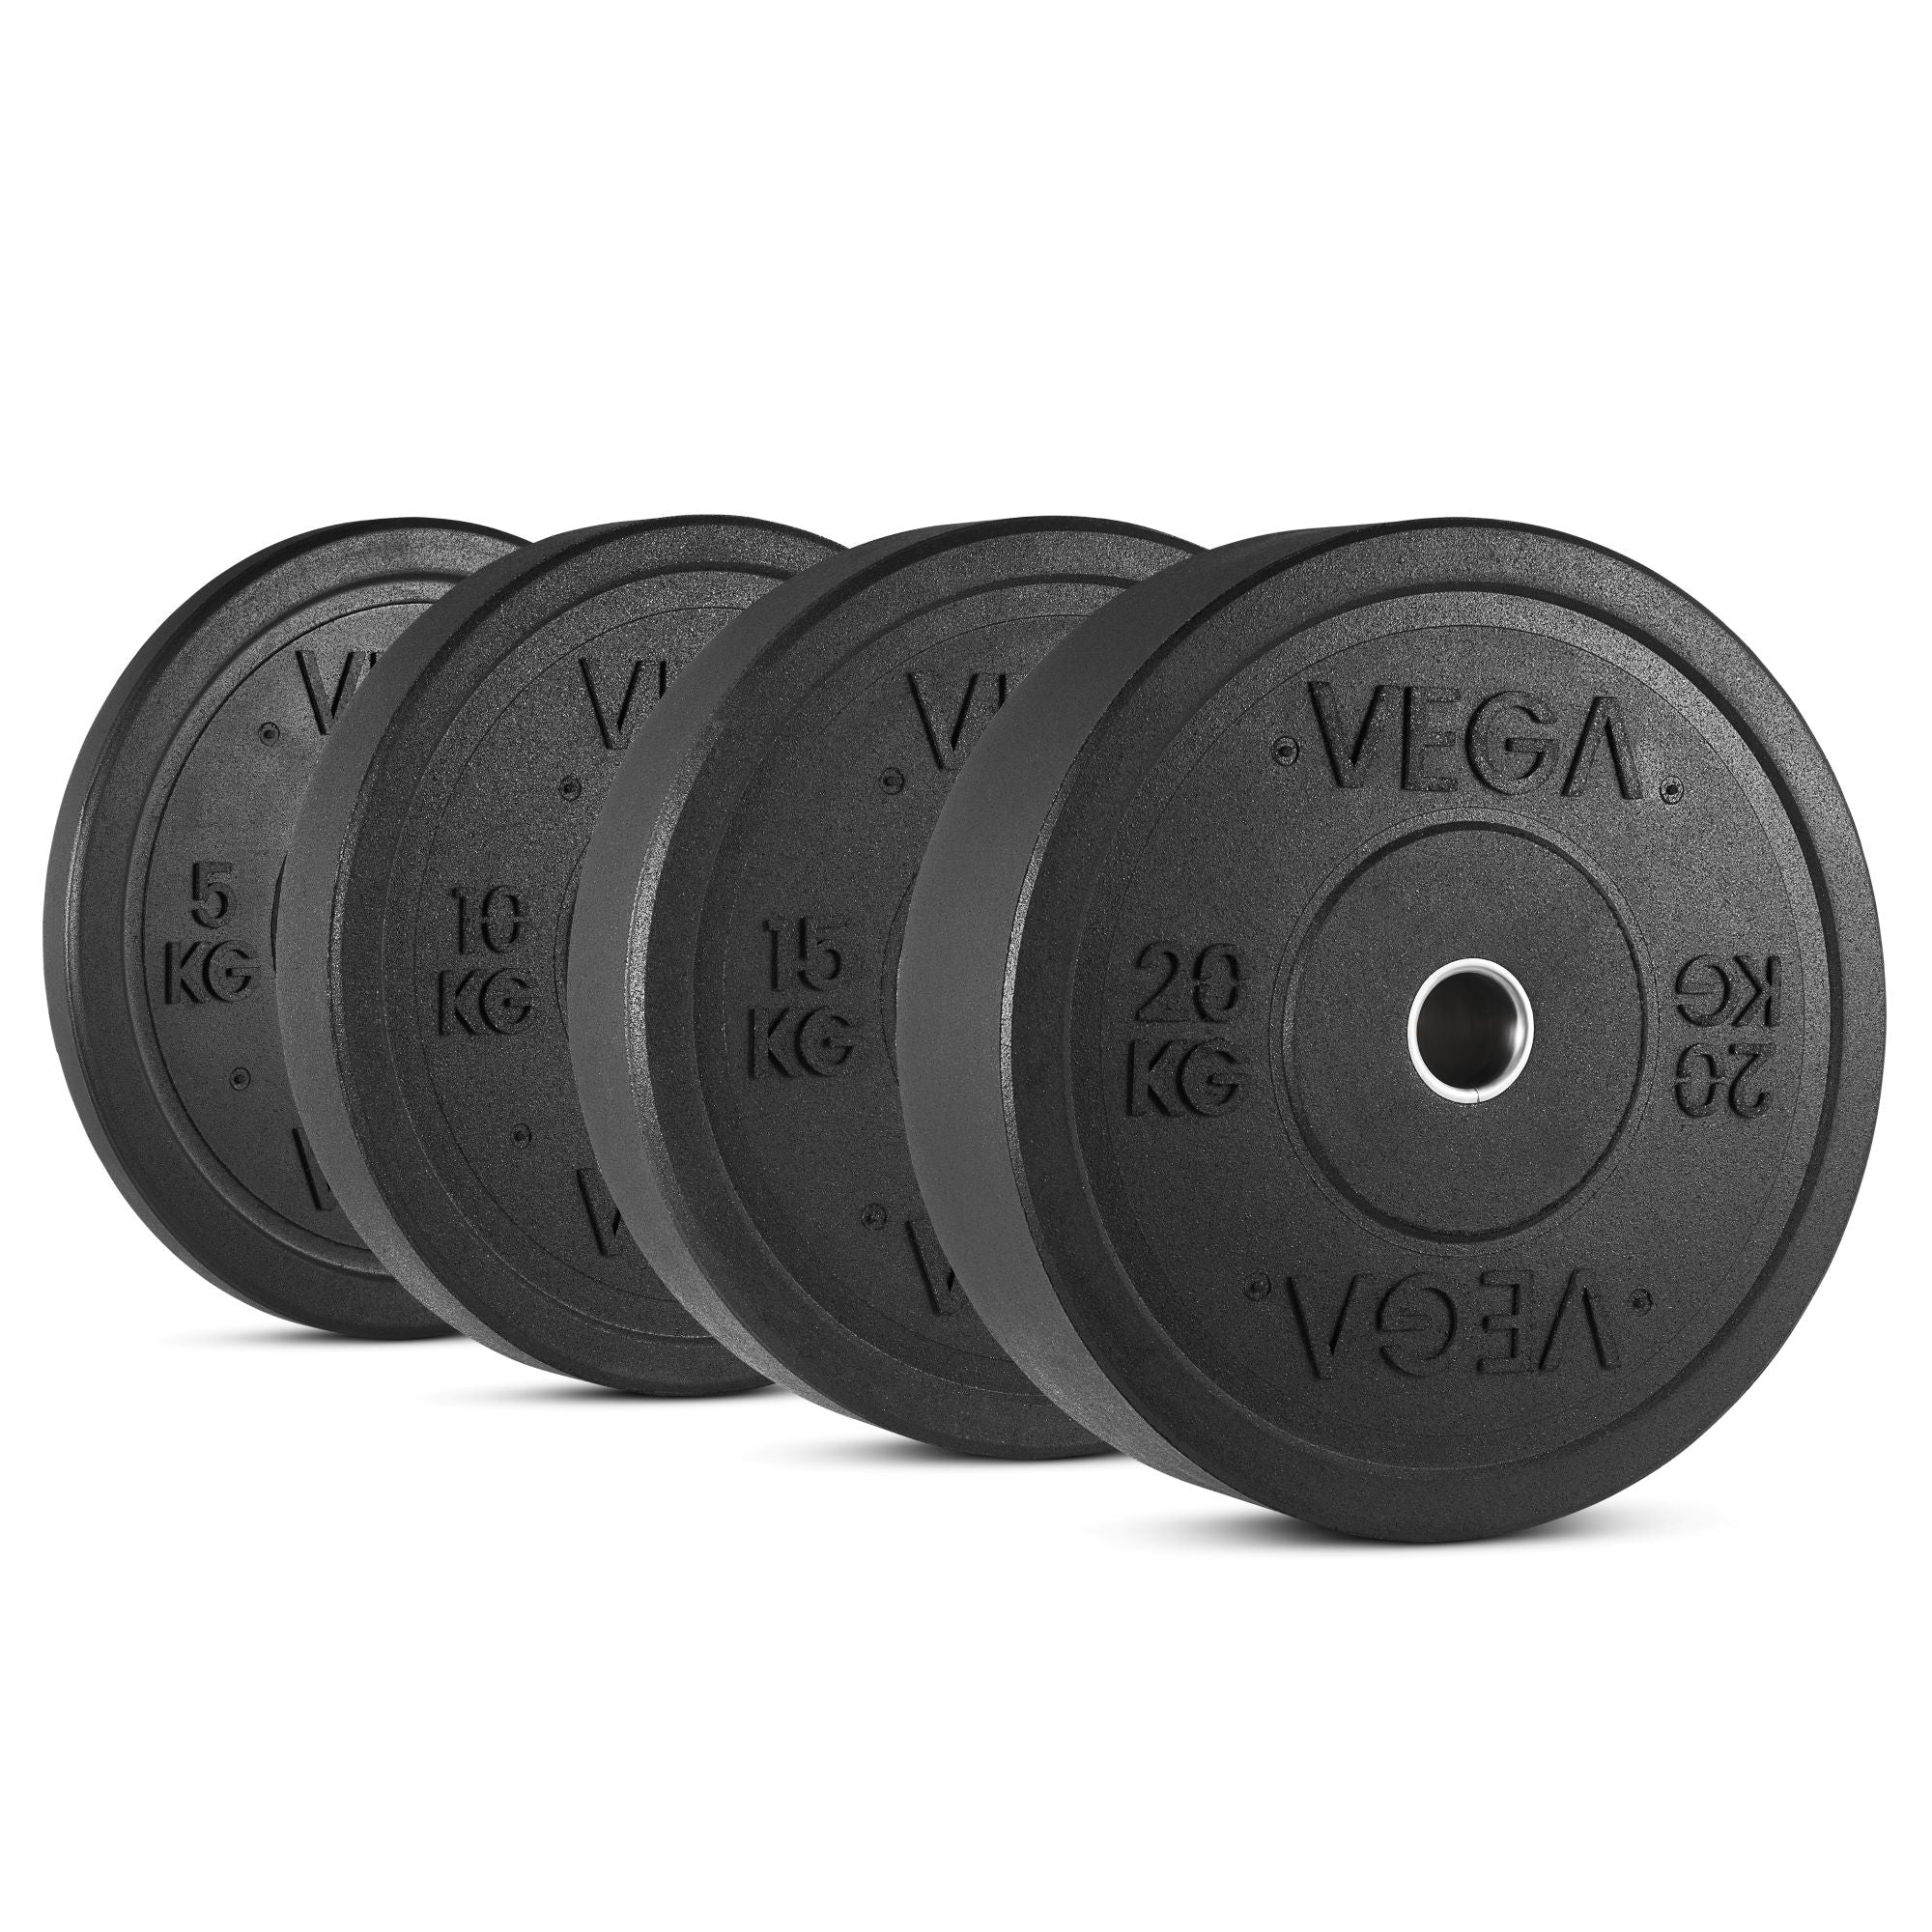 Vega Rubber Crumb Bumper Olympic Weight Plate